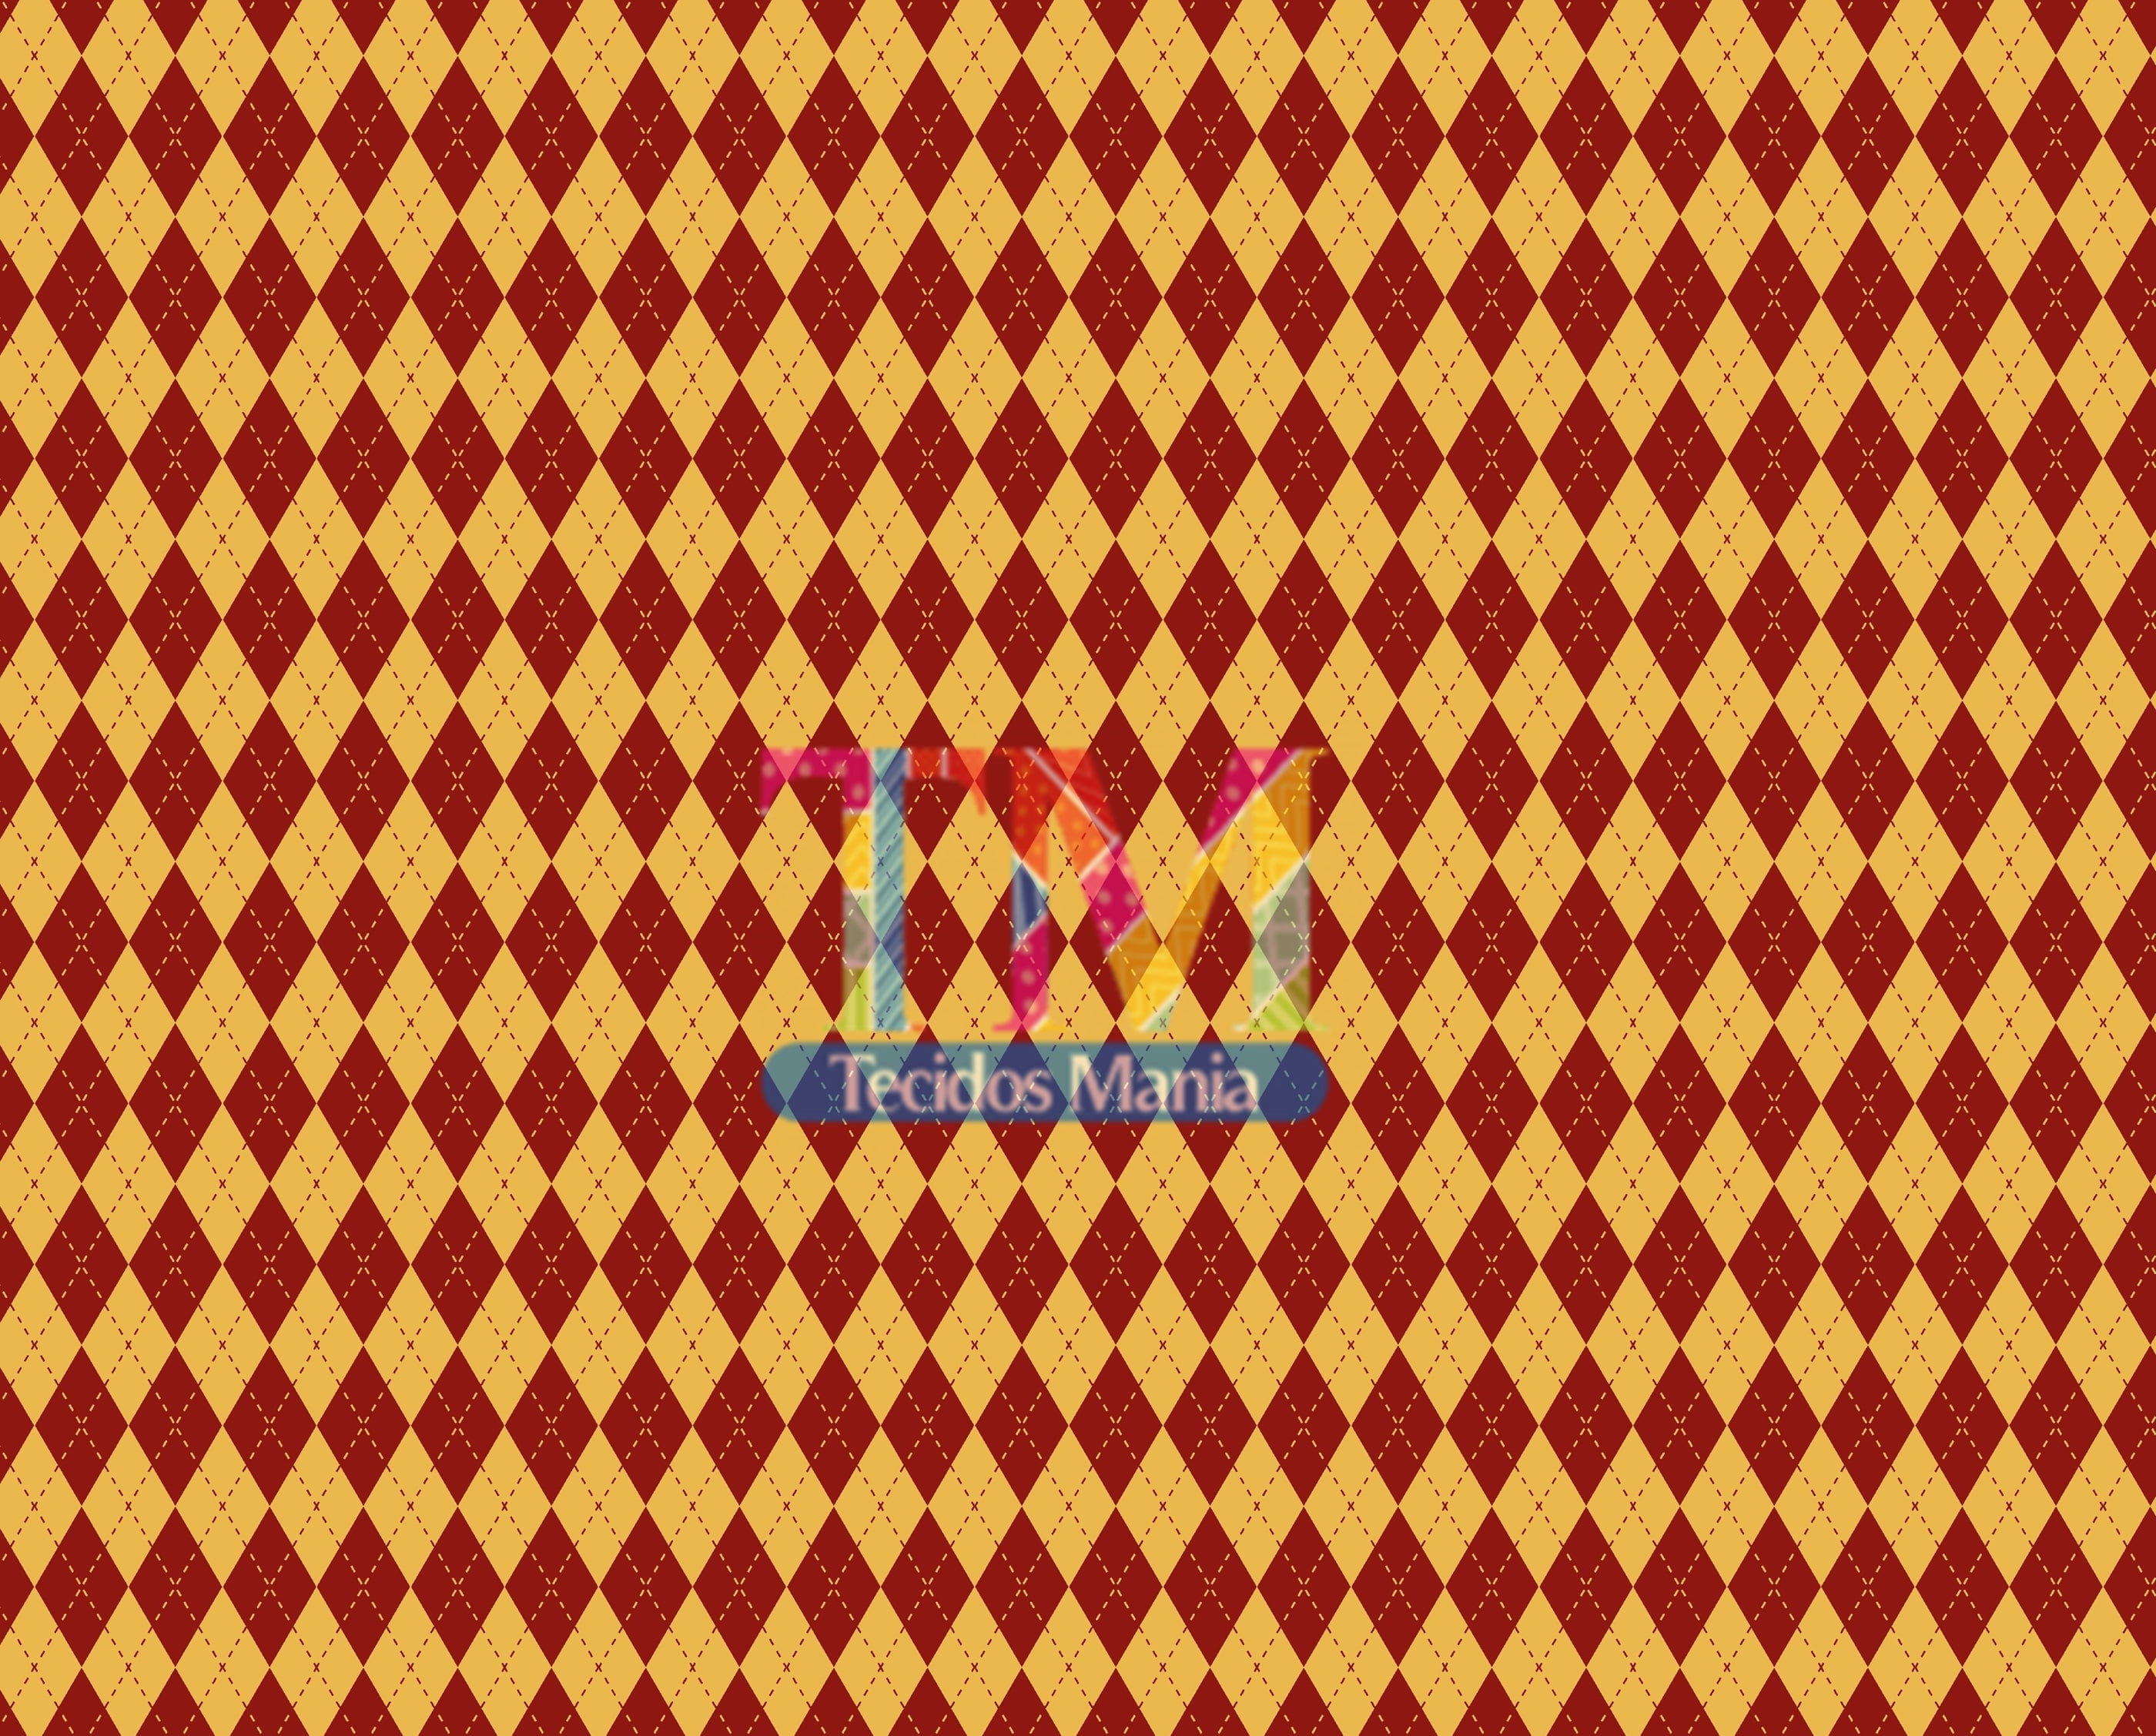 Tecido tricoline, microfibra ou gabardine estampado - Harry Potter - Xadrez - amarelo com bordo